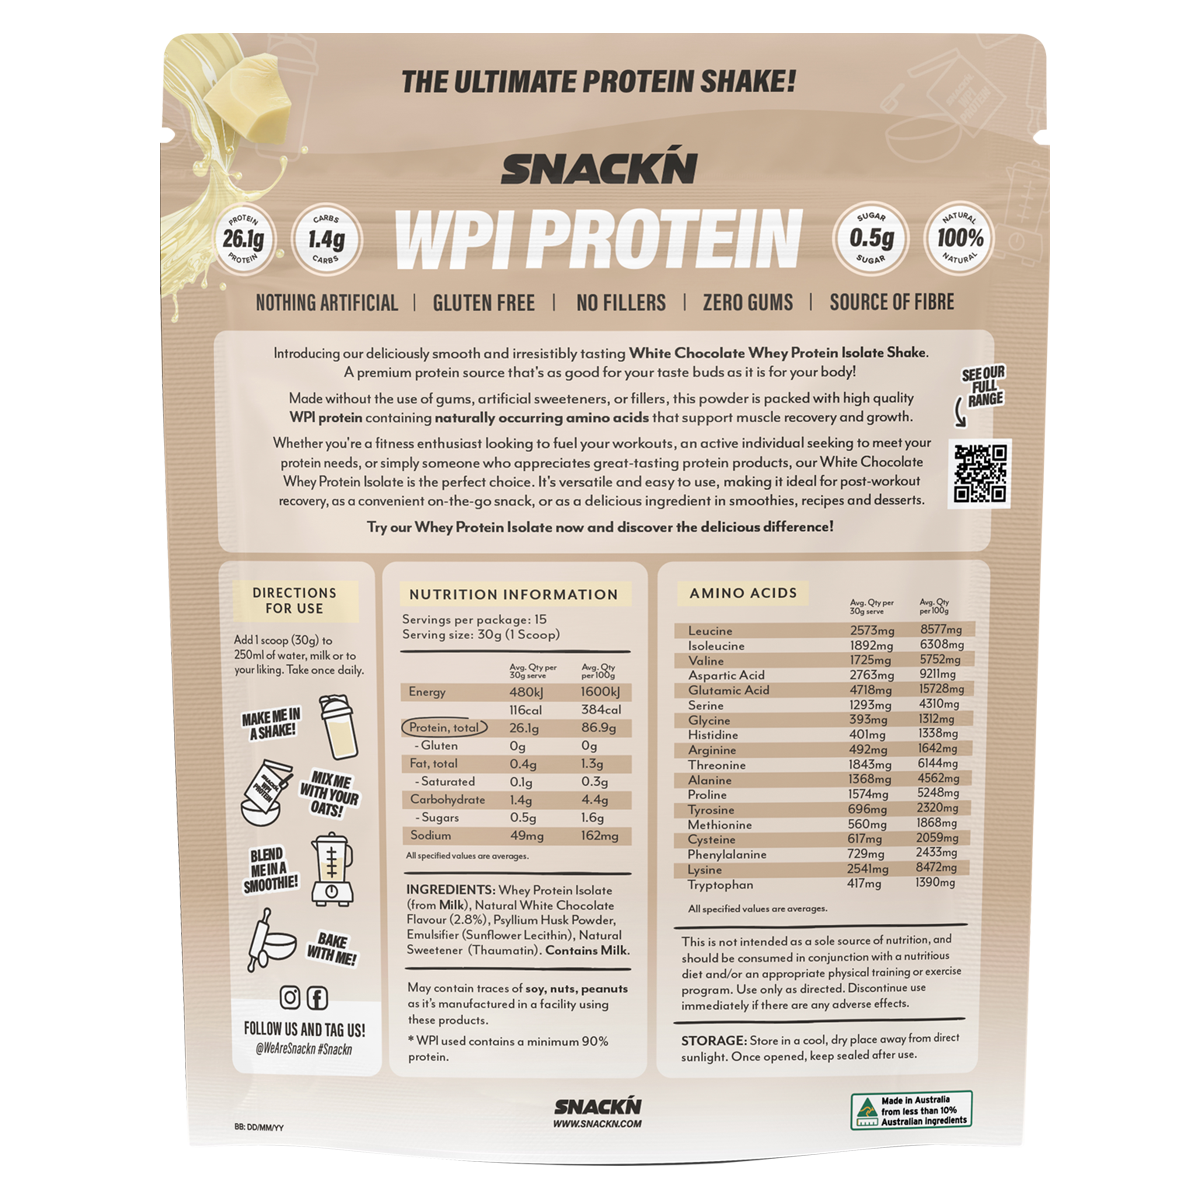 Snackn WPI Protein - Super Nutrition